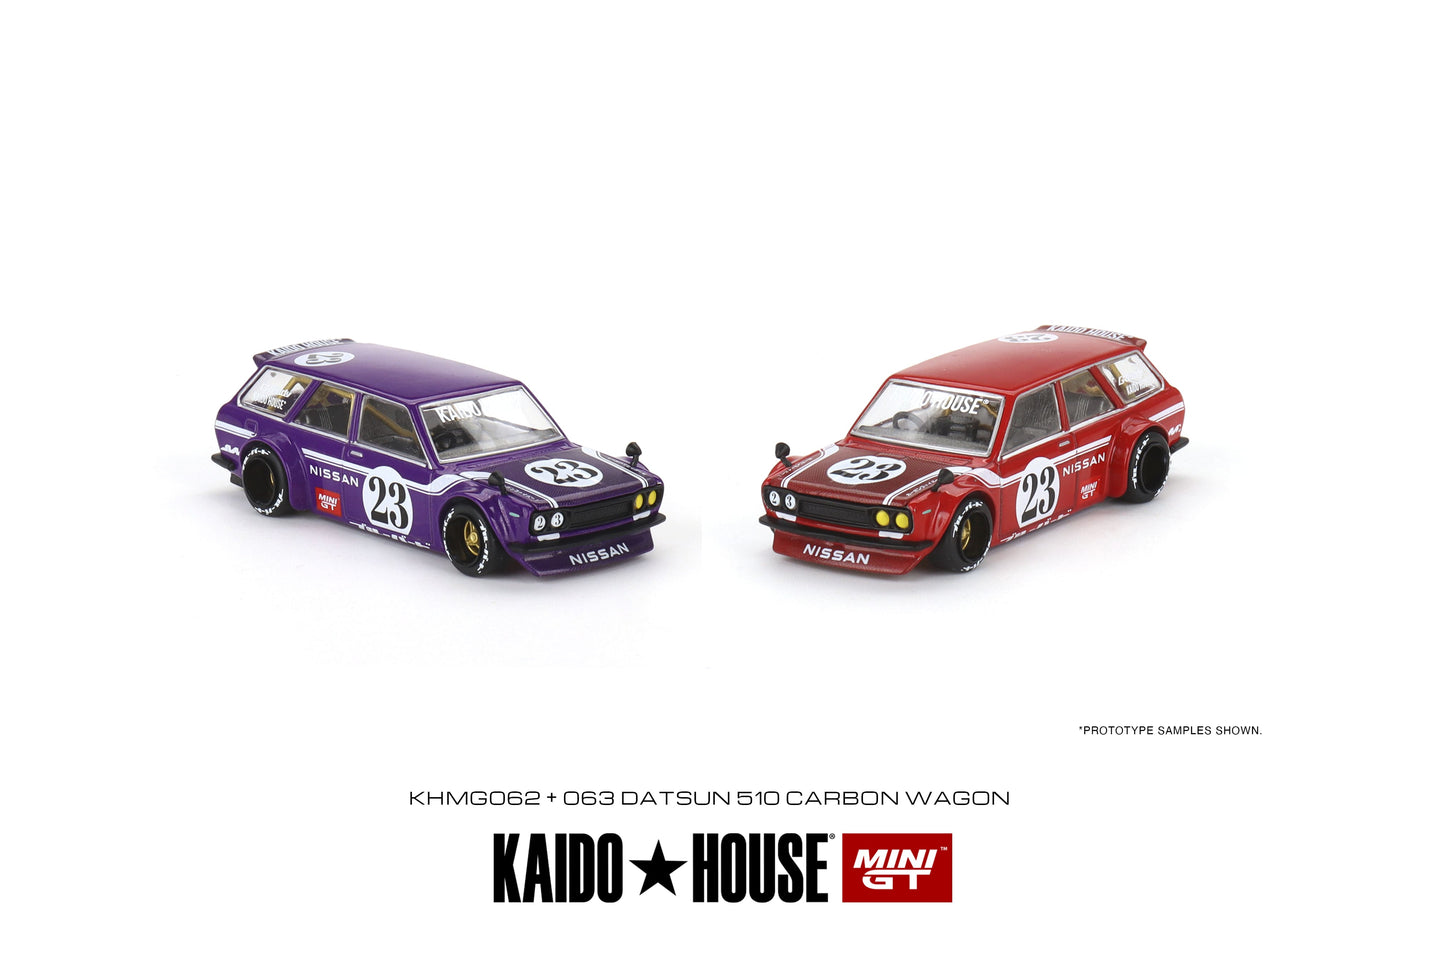 Mini GT x Kaido House No.063 Datsun Kaido 510 Wagon Carbon Fiber V2